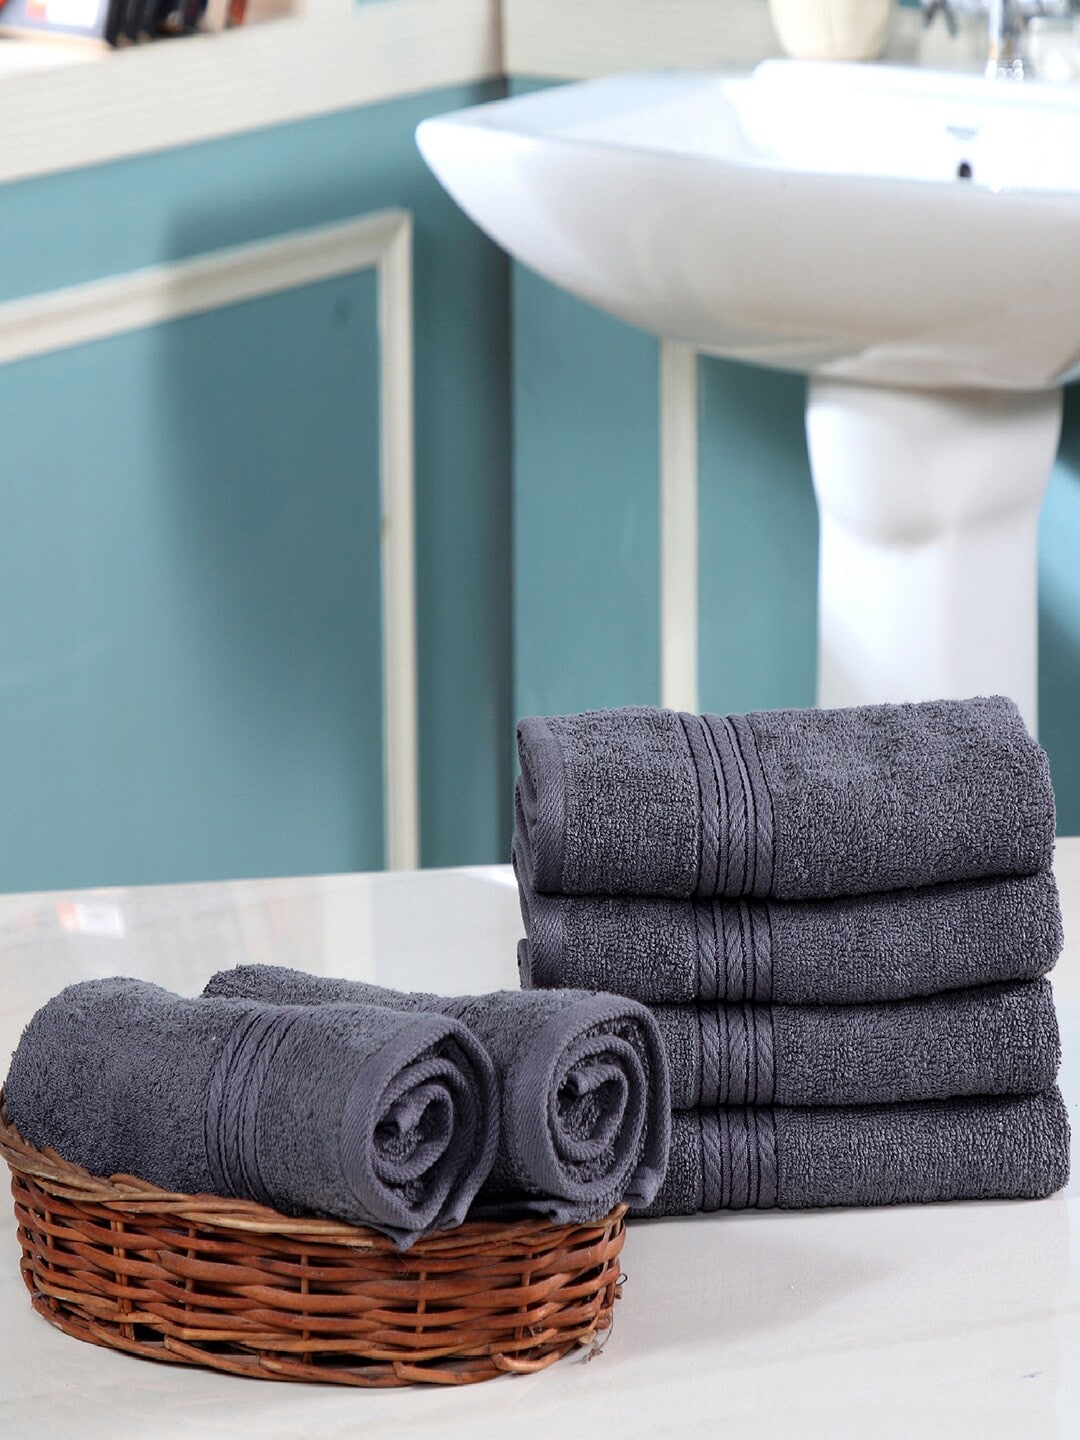 Avira Home Set Of 6 Hand Towels Price in India